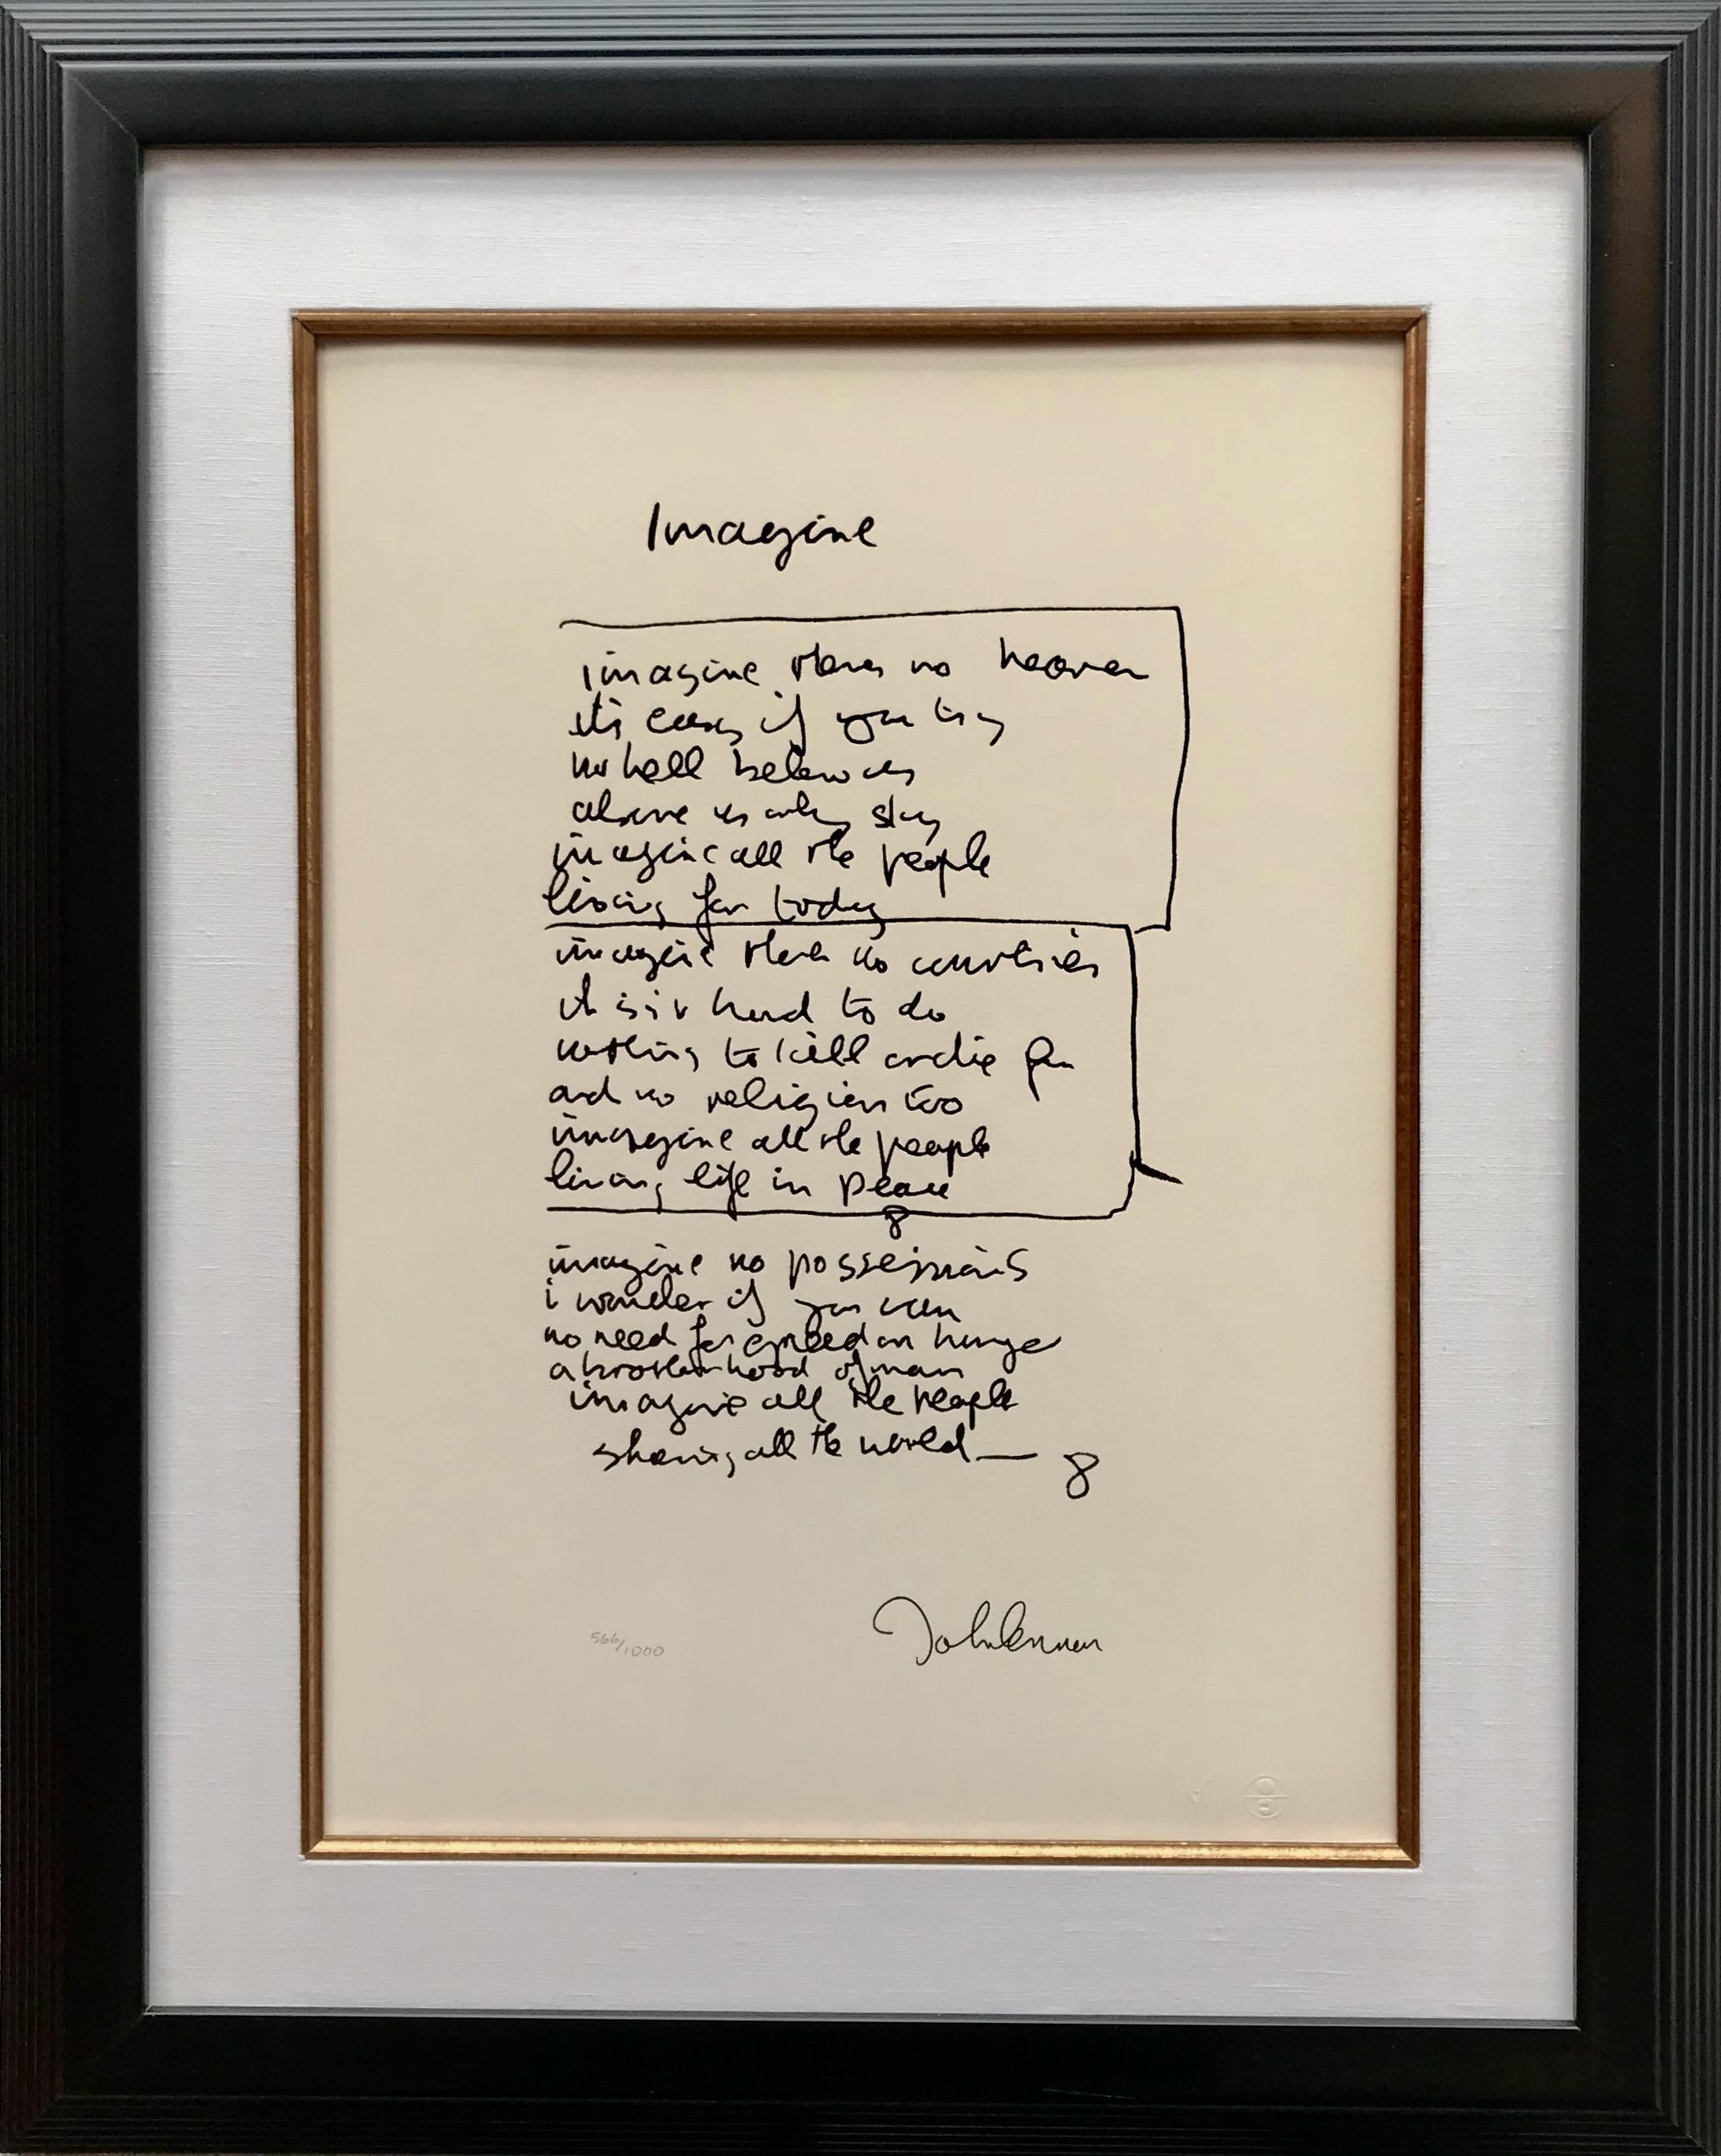 John Lennon Woman Quote Song Lyric Print